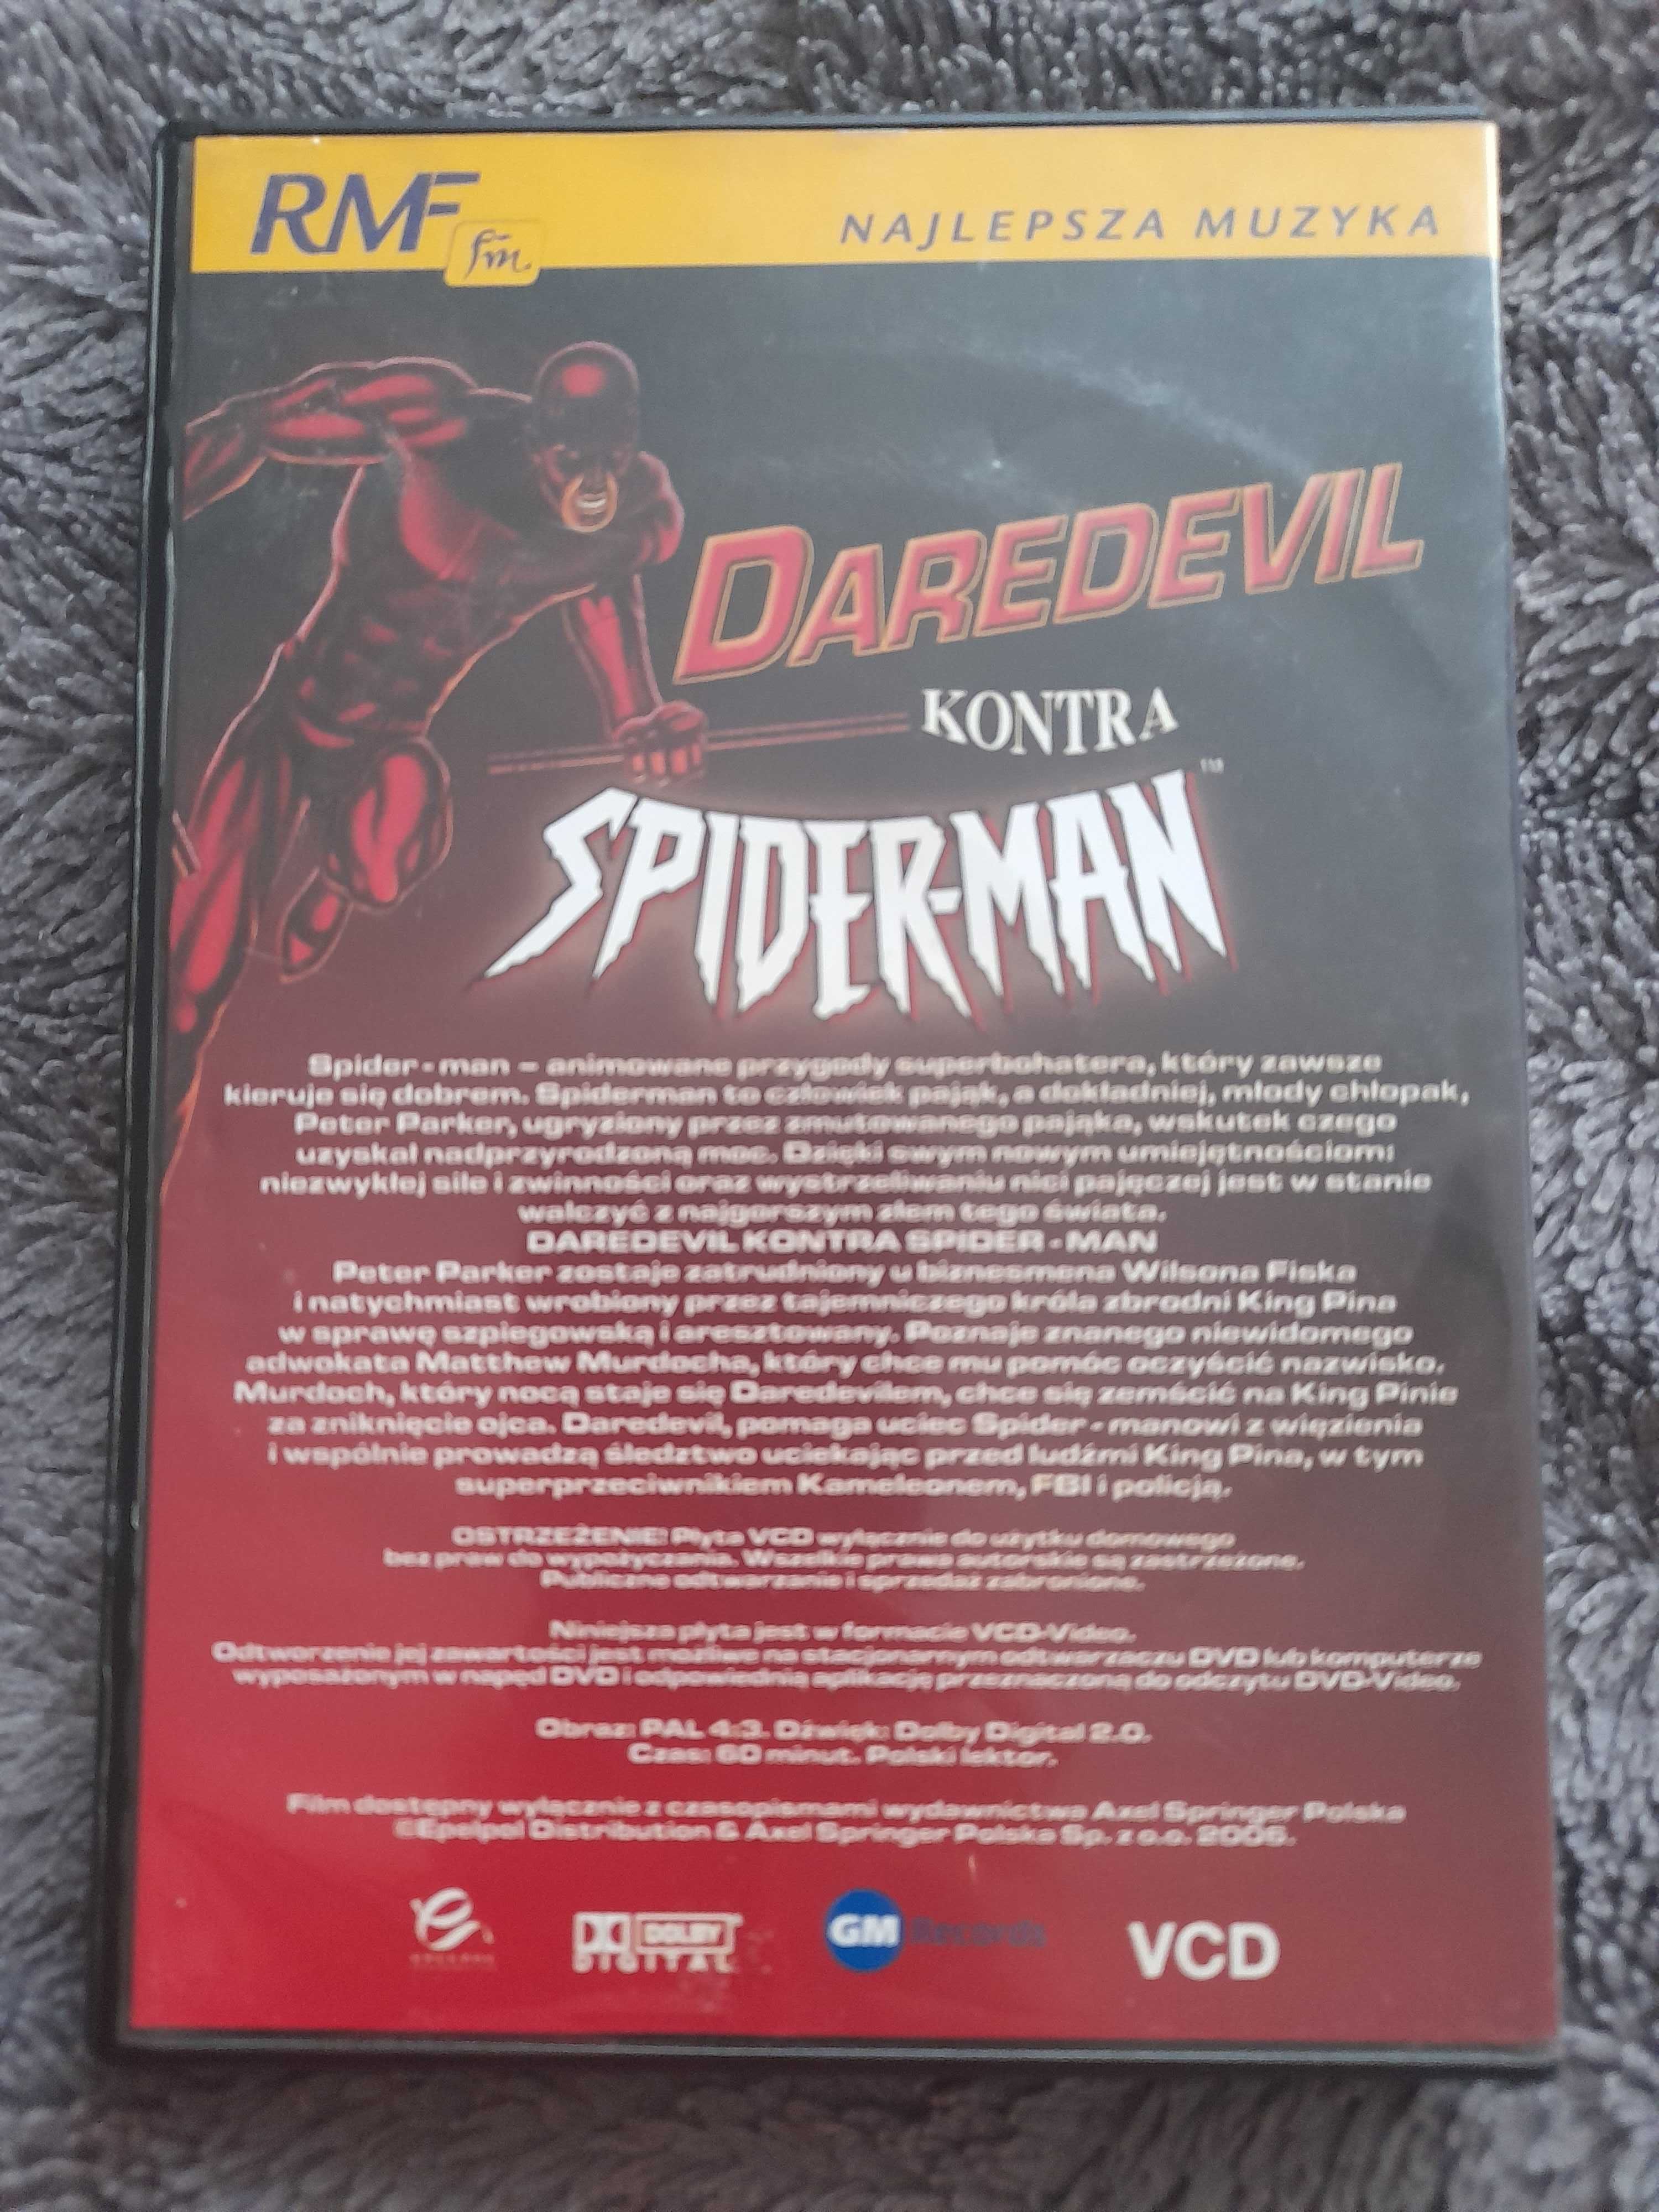 Film daredevil kontra spider-man płyta VCD